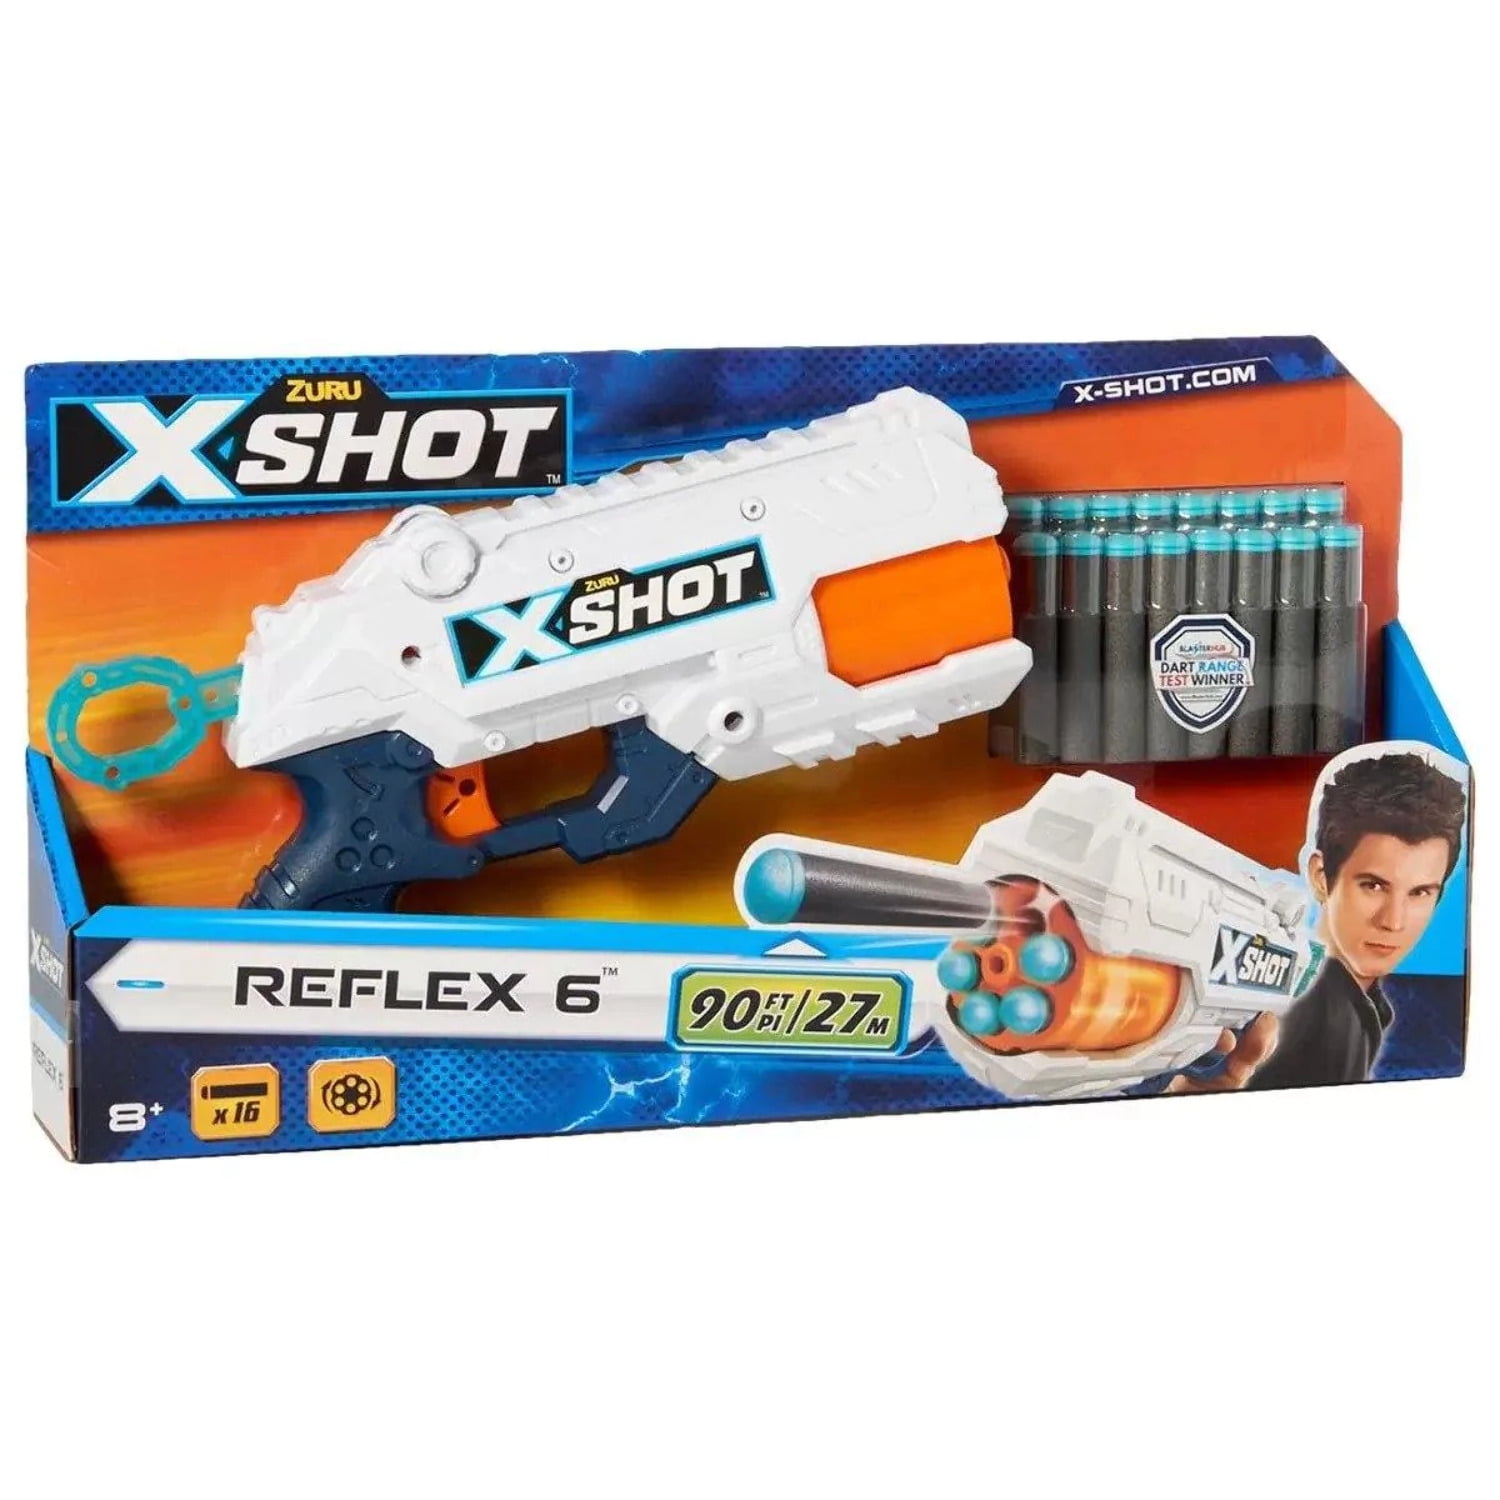 NEU X-SHOT 200 Darts Refill Carry Case Toys/Spielzeug Zuru Inc Zuru Inc 